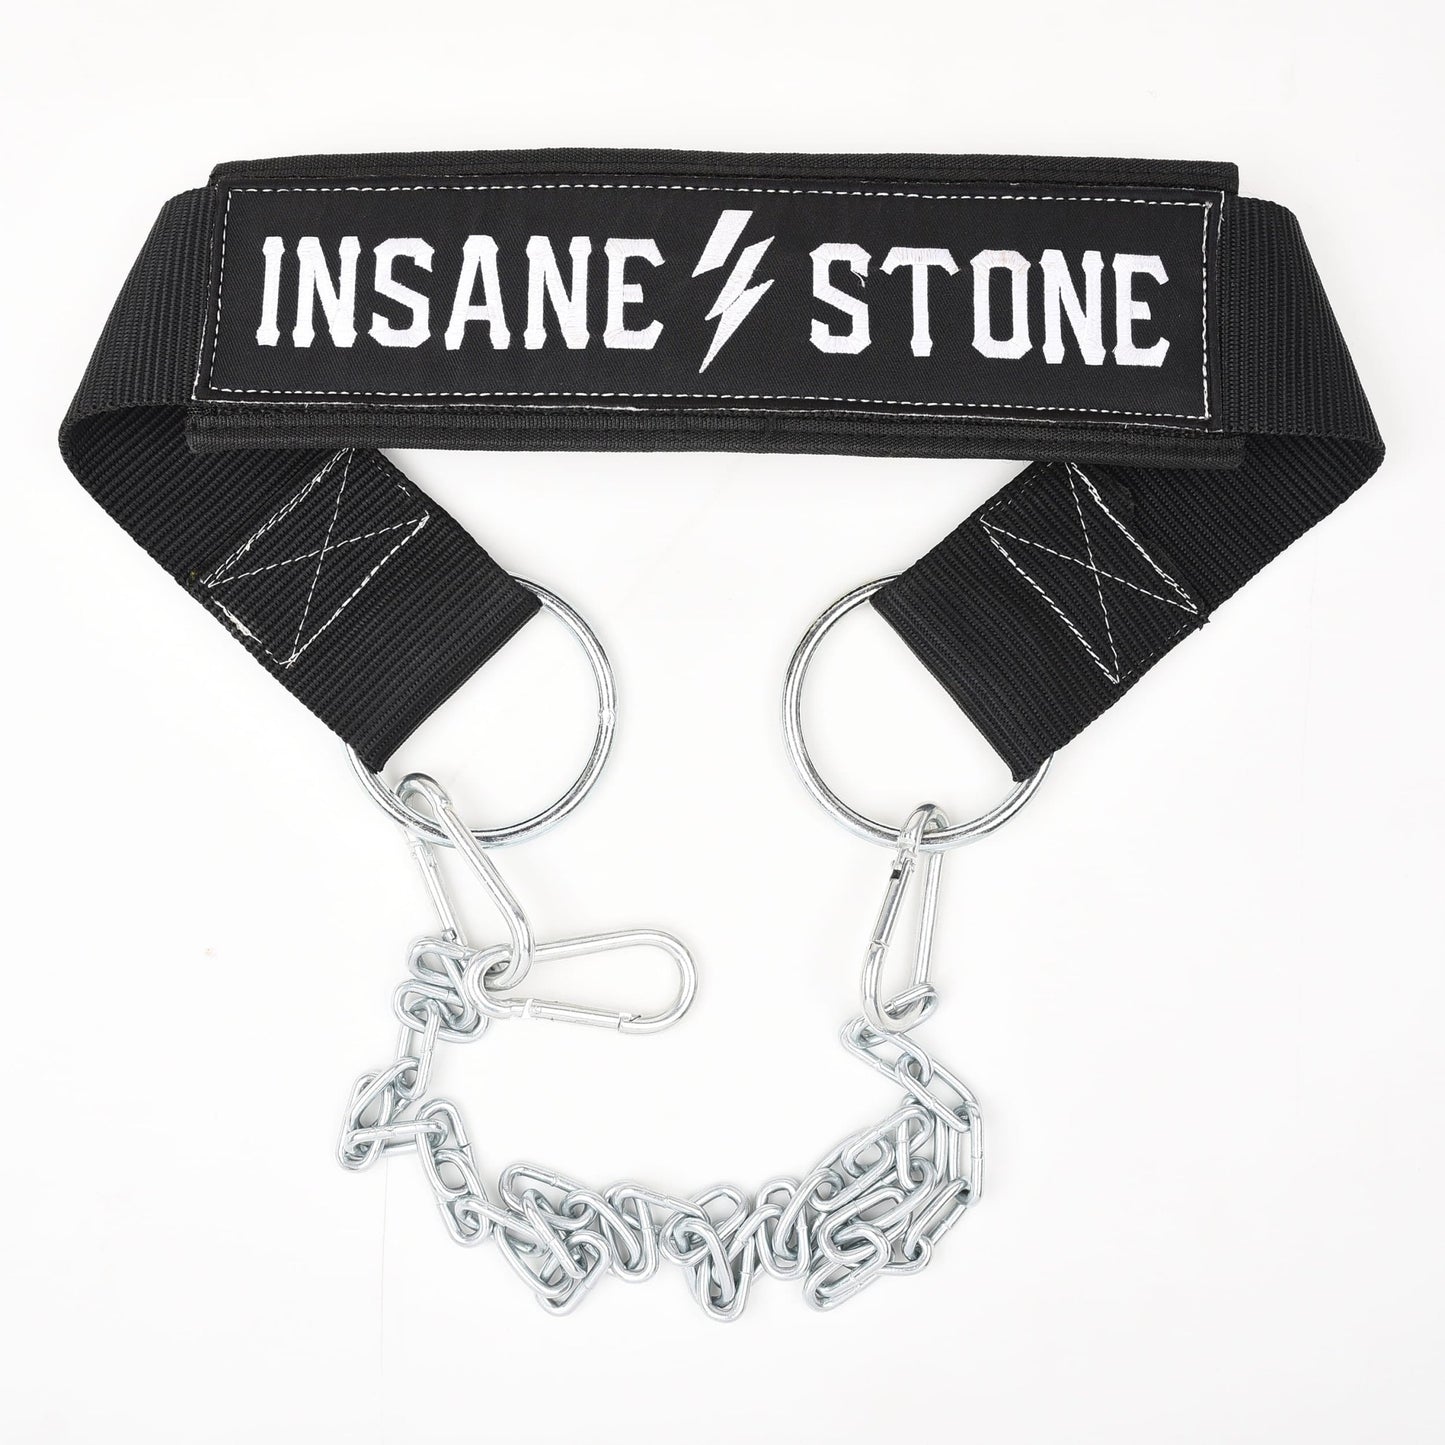 Insane Dip Belt - Insane Stone